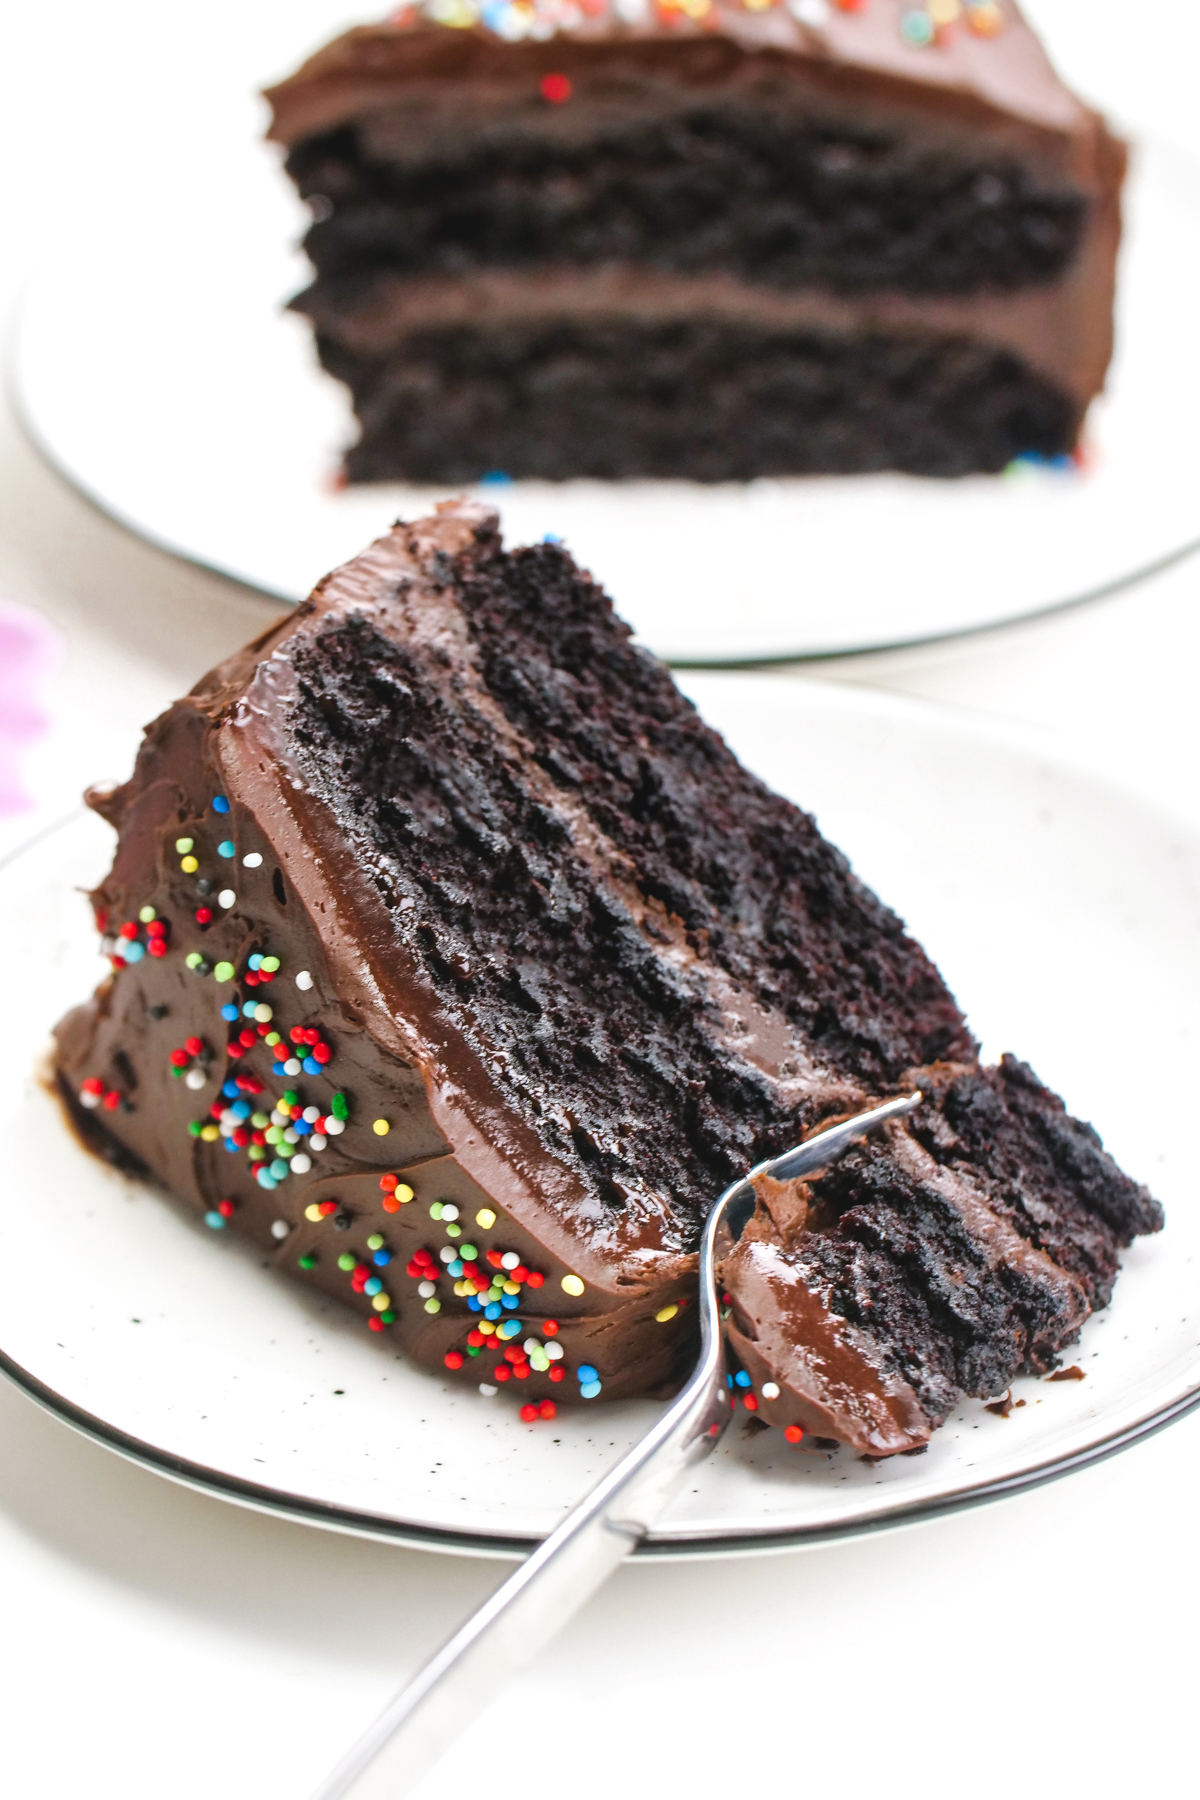 Vegan Chocolate Cake - Super Fudgy! (gluten-free options) - Texanerin Baking